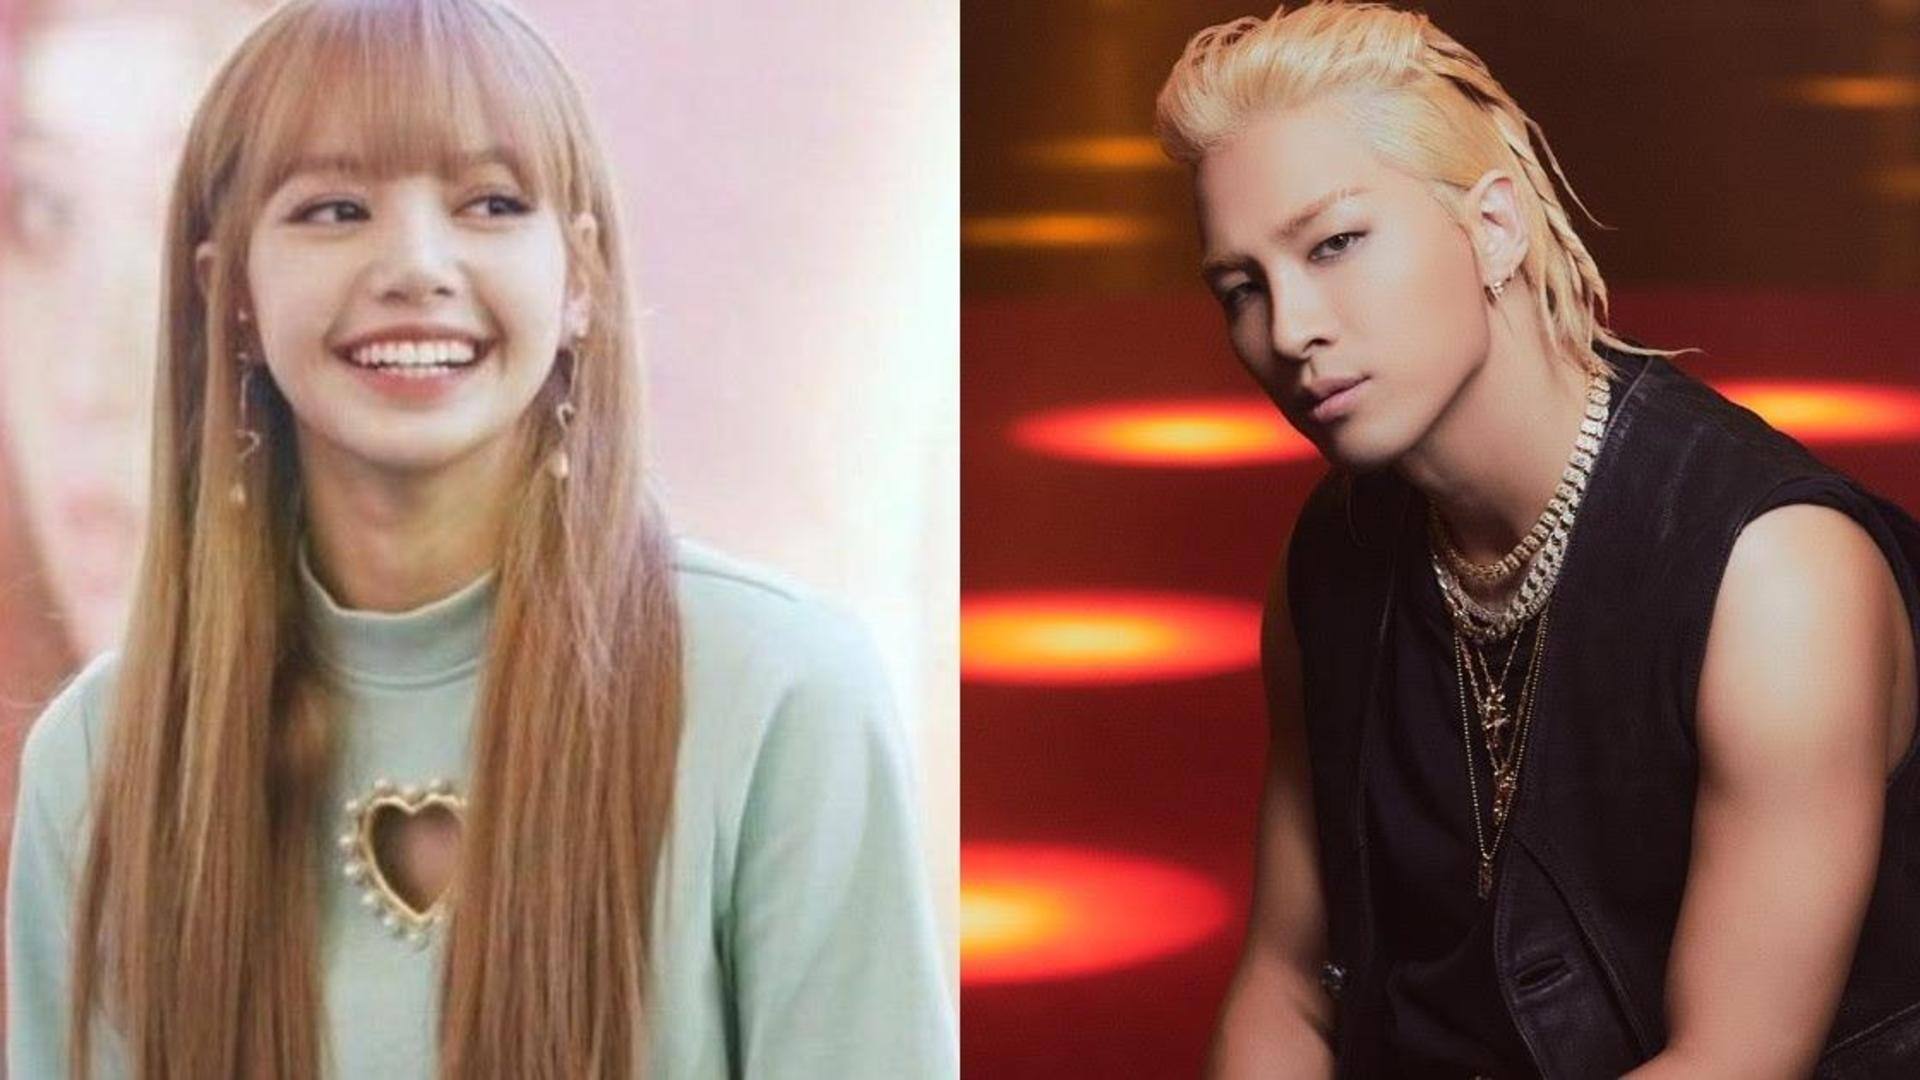 K-pop: BLACKPINK's Lisa to feature in BIGBANG's Taeyang's upcoming album